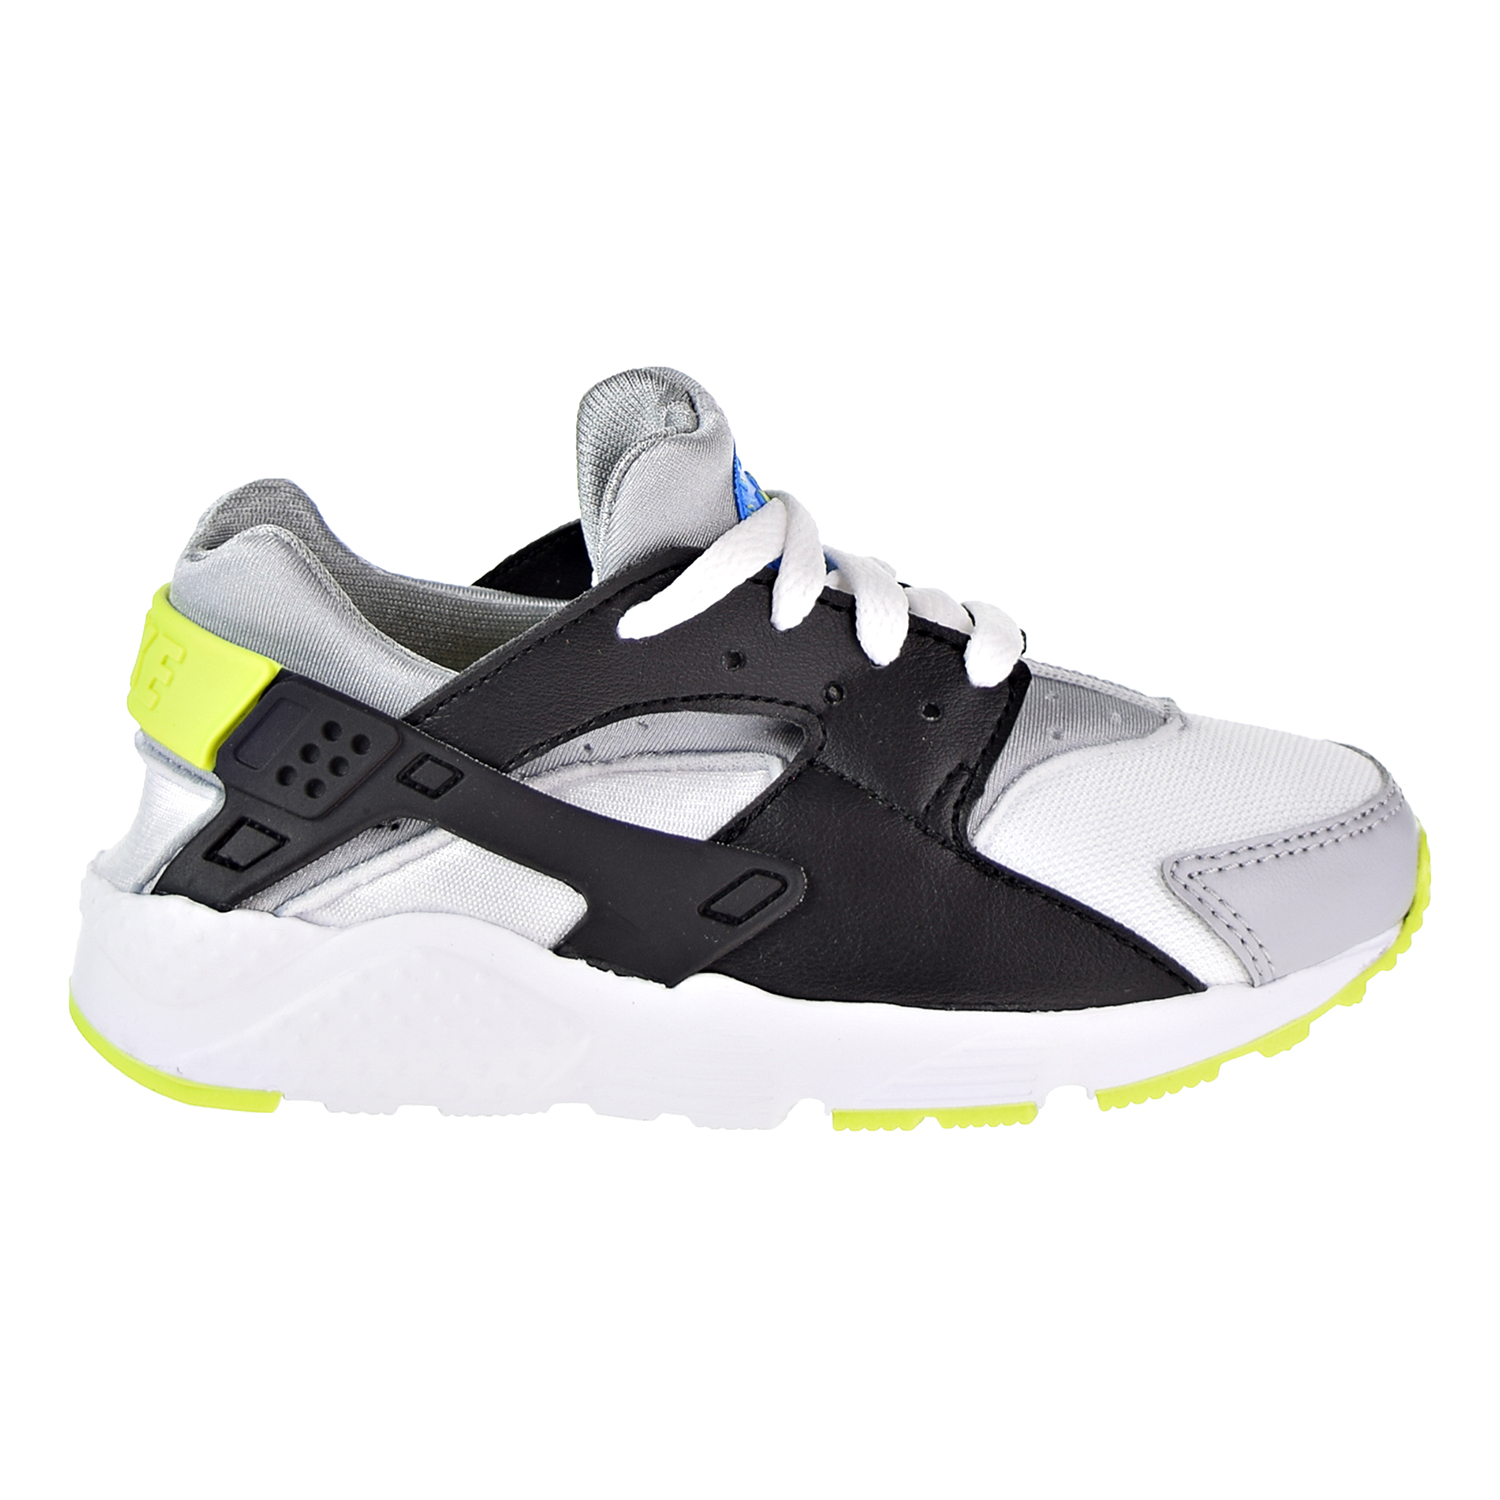 Nike Huarache Little Kid's Running Shoes University White/Cyber/Photo Blue 704949-112 - image 1 of 6